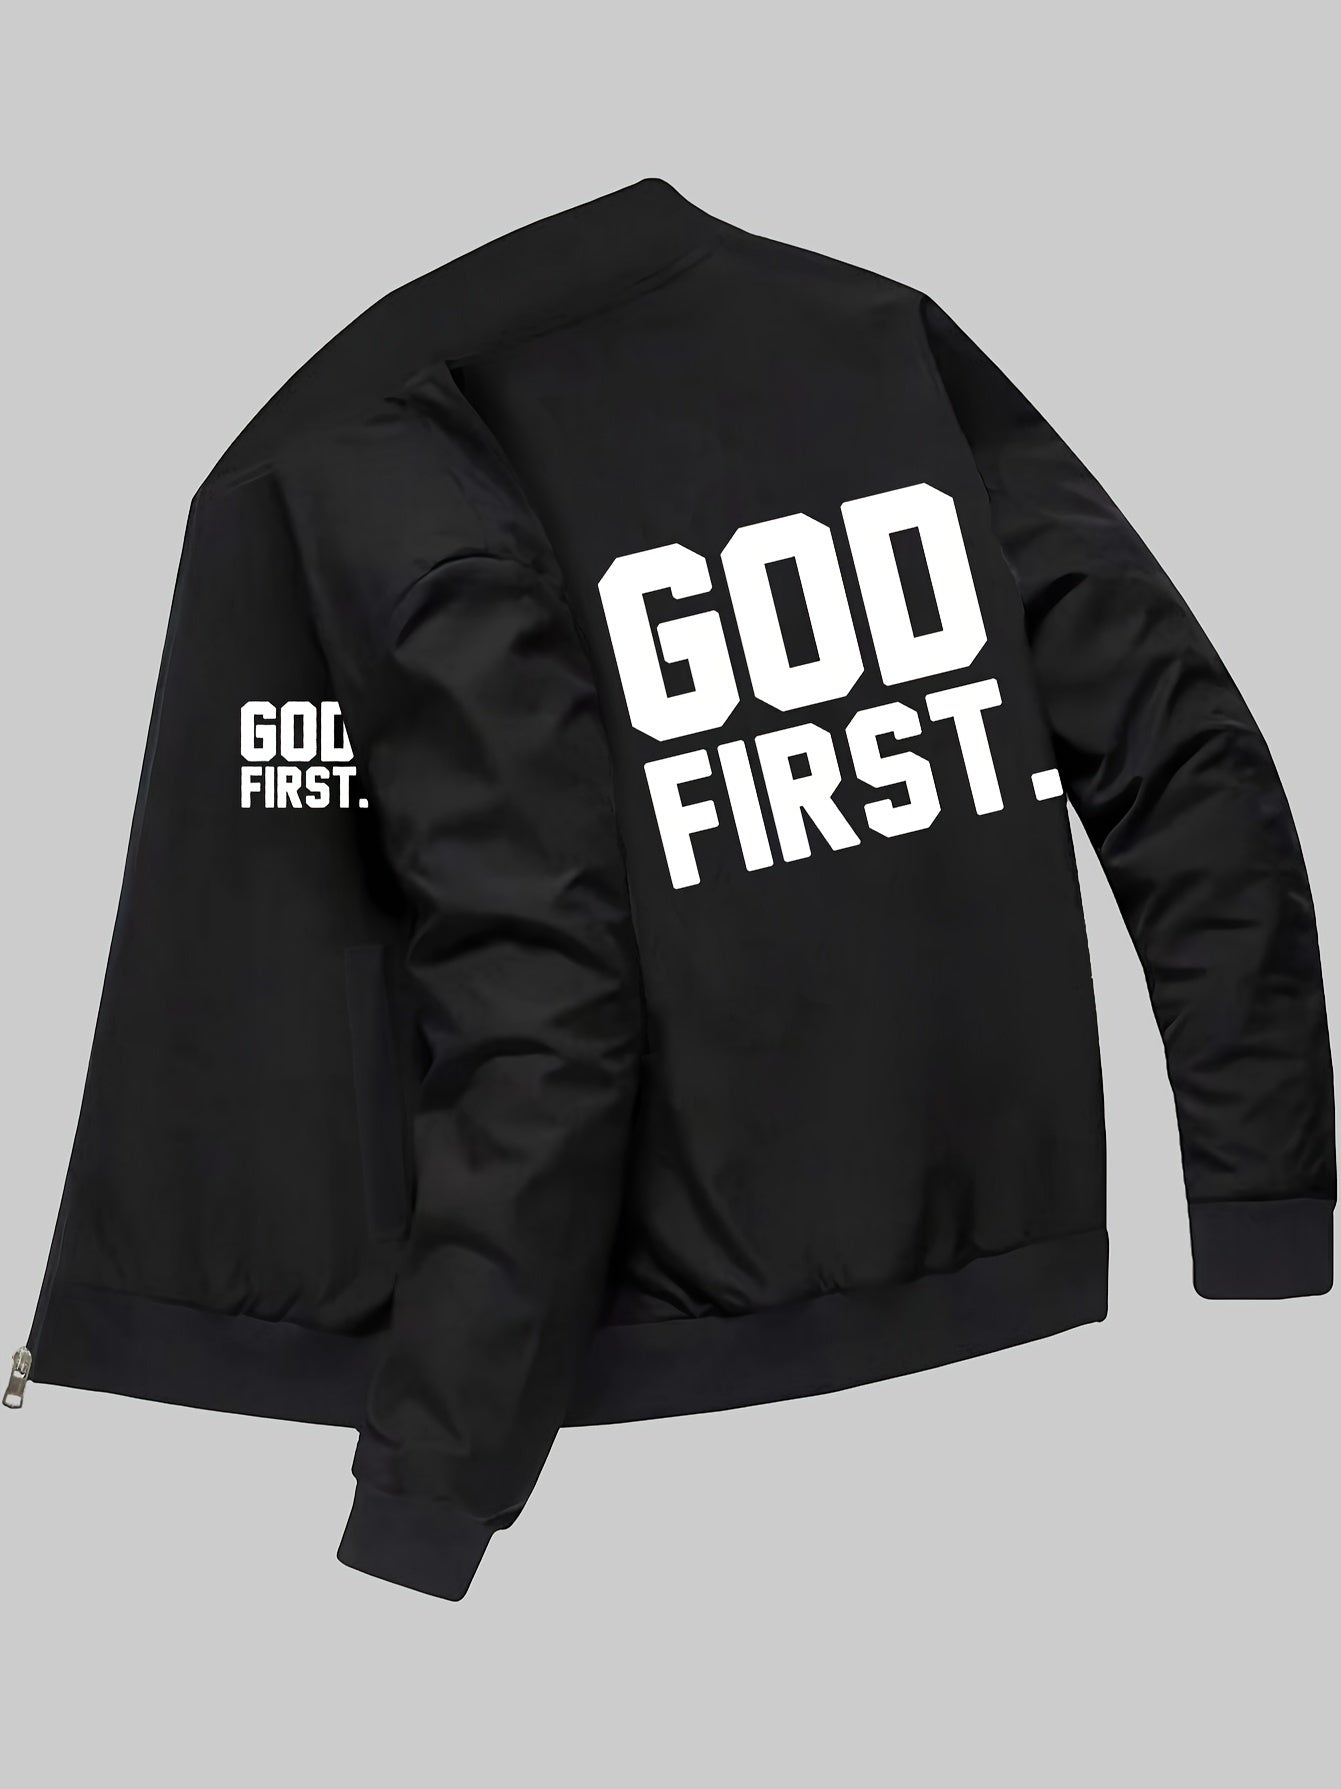 God First Men's Christian Jacket claimedbygoddesigns